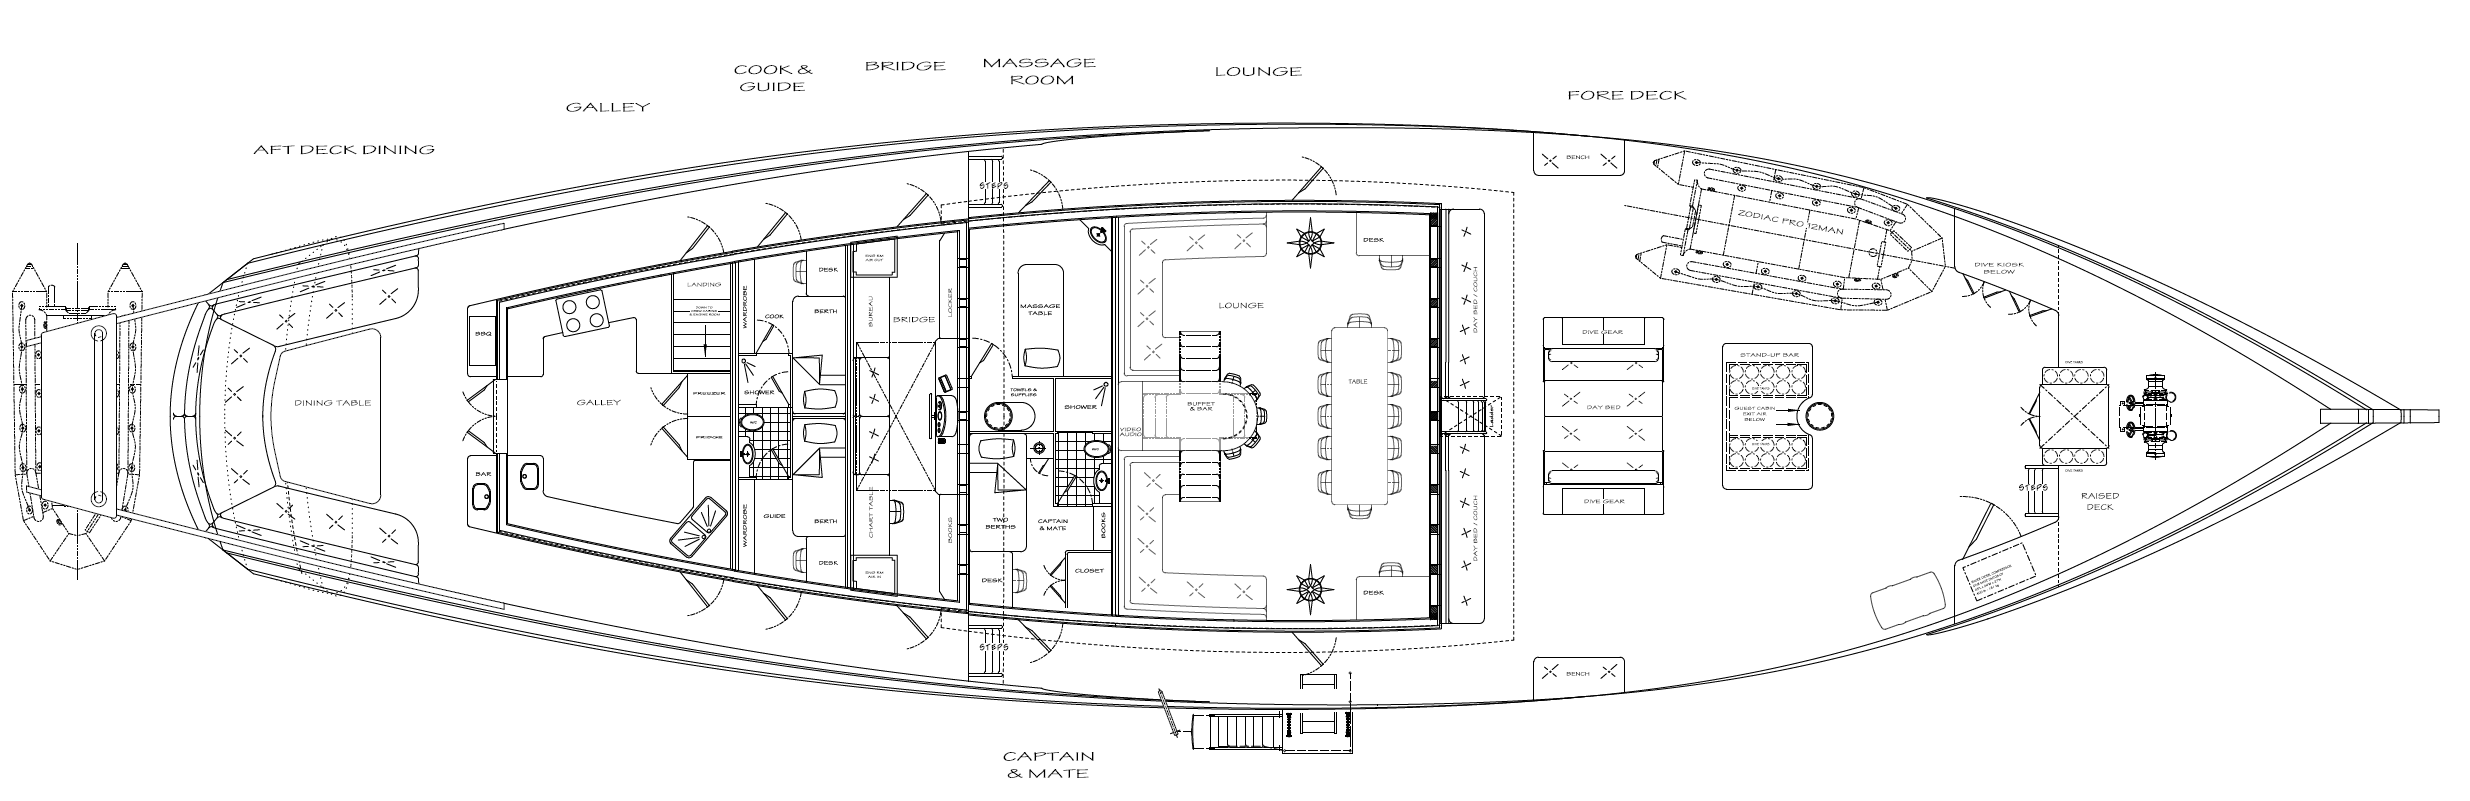 36m Lombok Privateer Deck Plan - Kasten Marine Design, Inc.